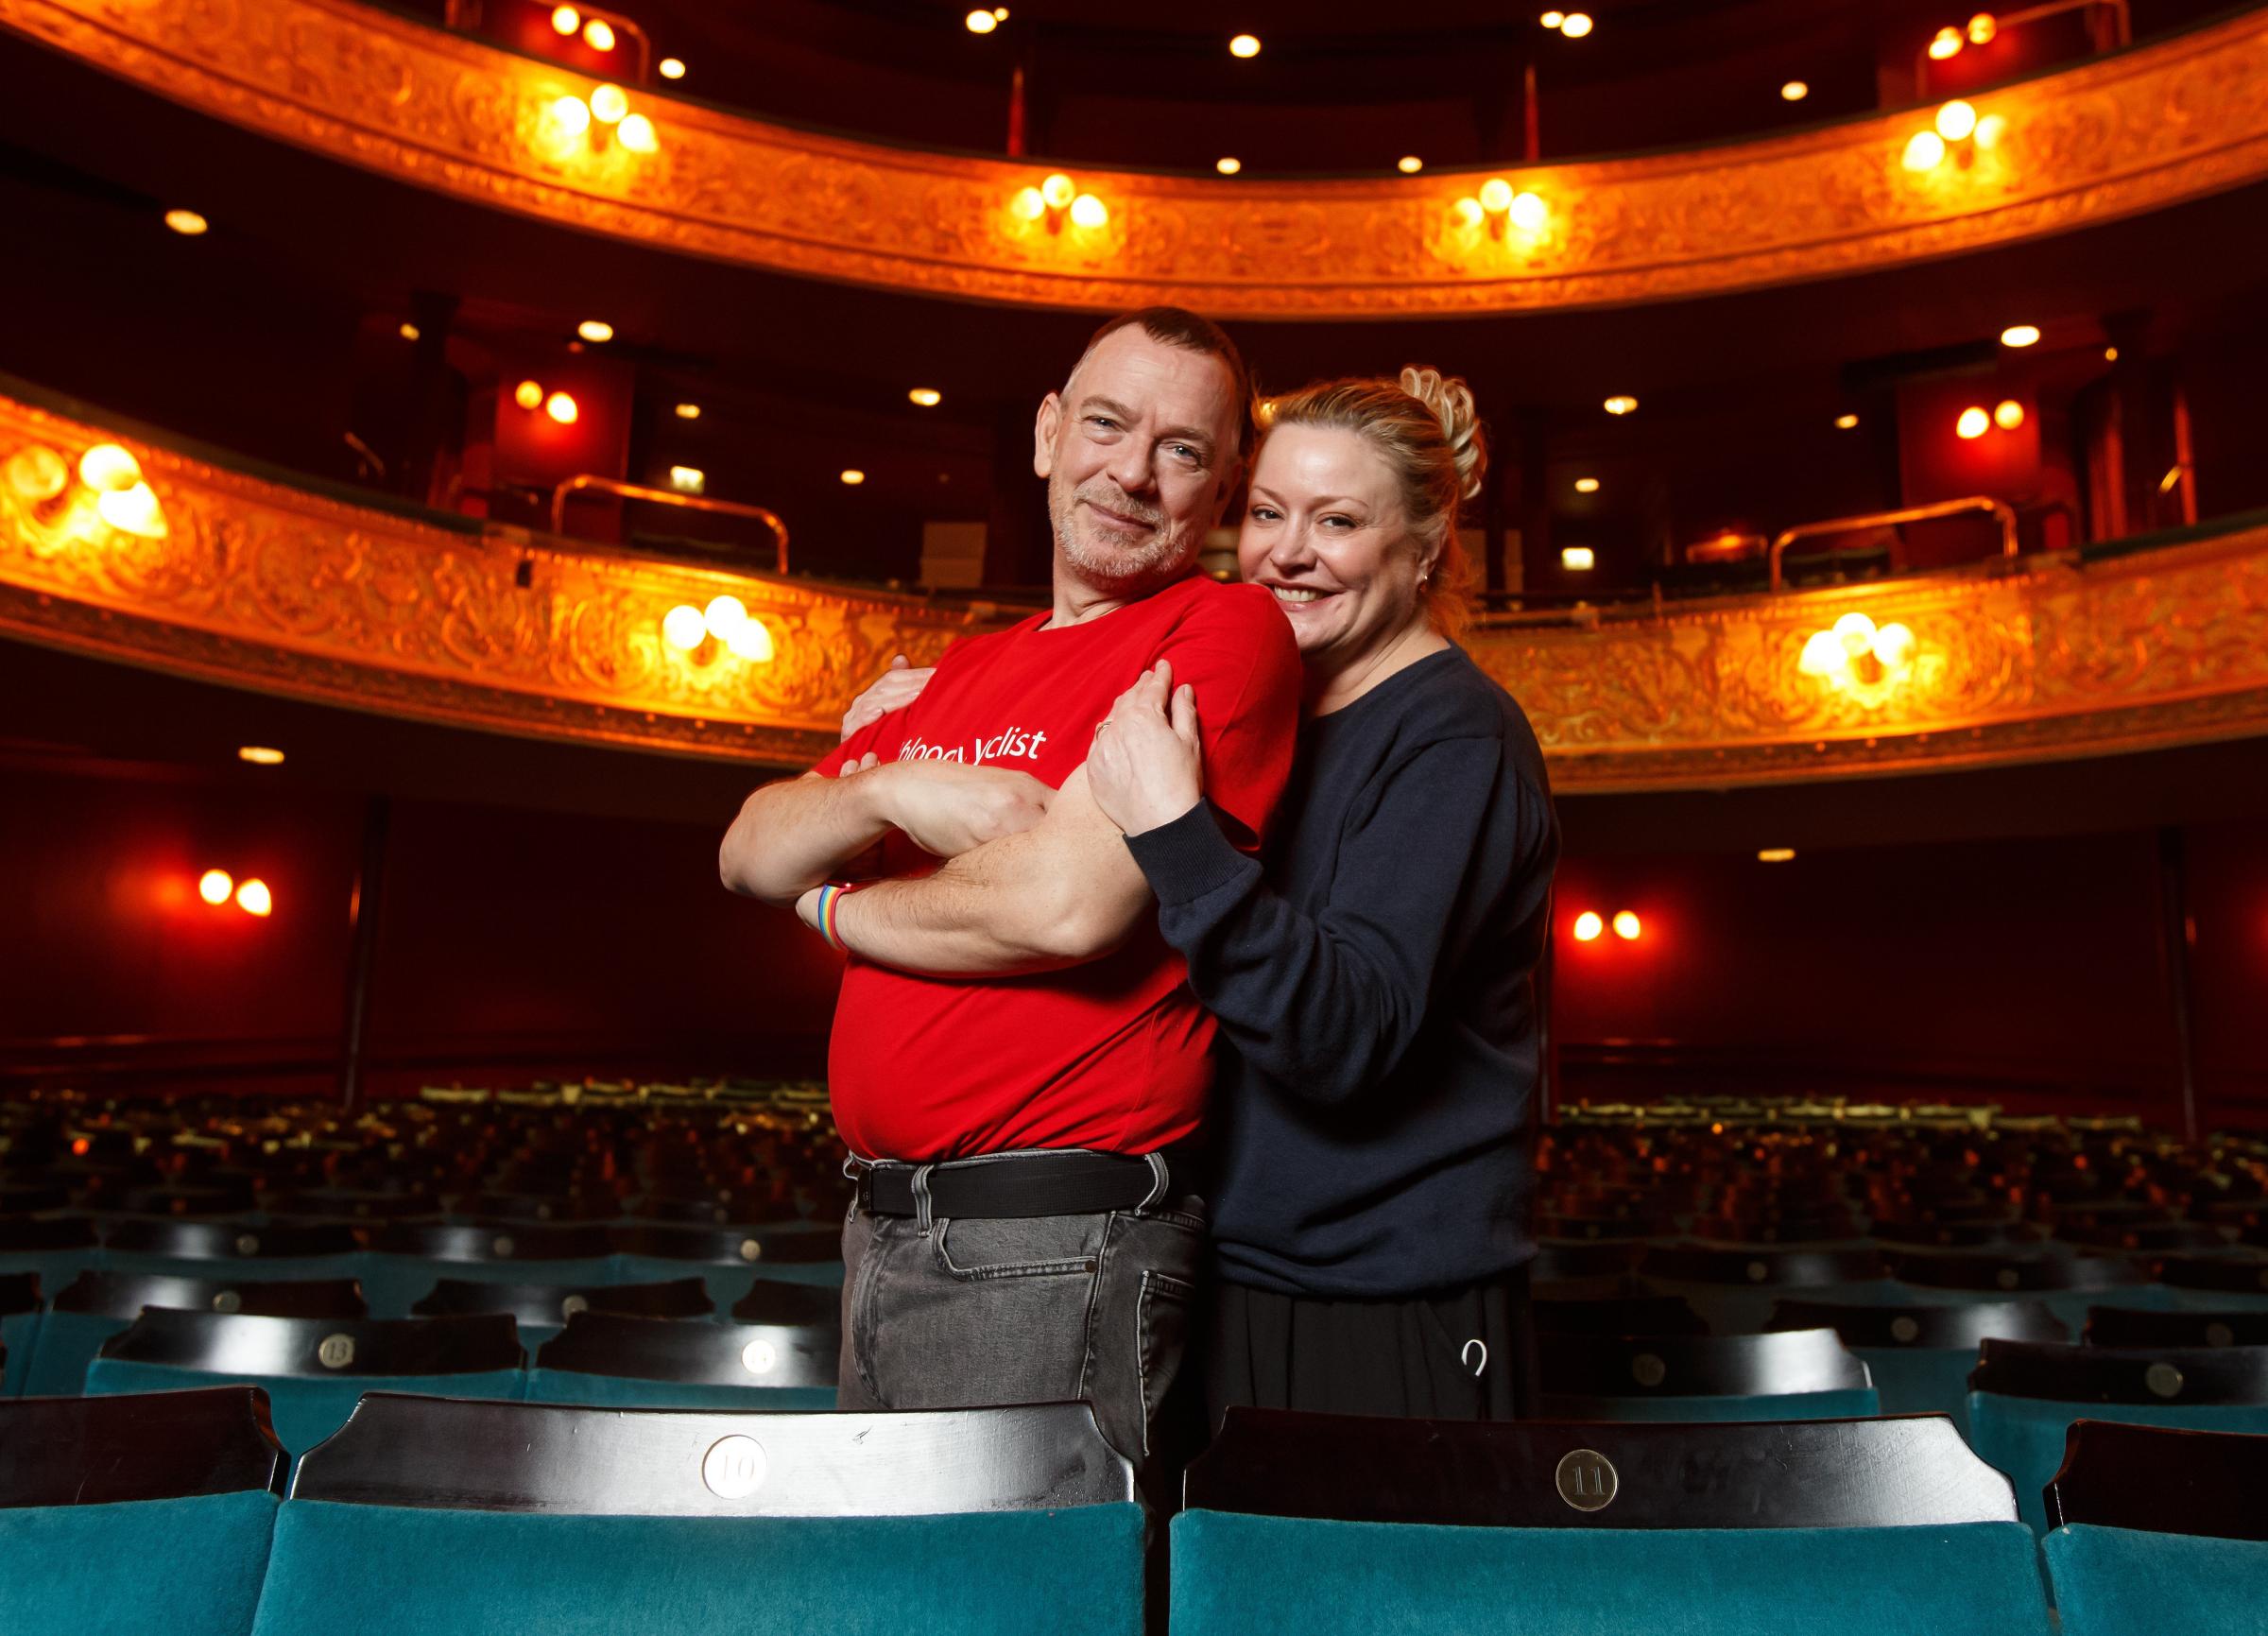 Eastenders actors Adam Woodyatt and Laurie Brett to star in Glasgow Theatre Royal production